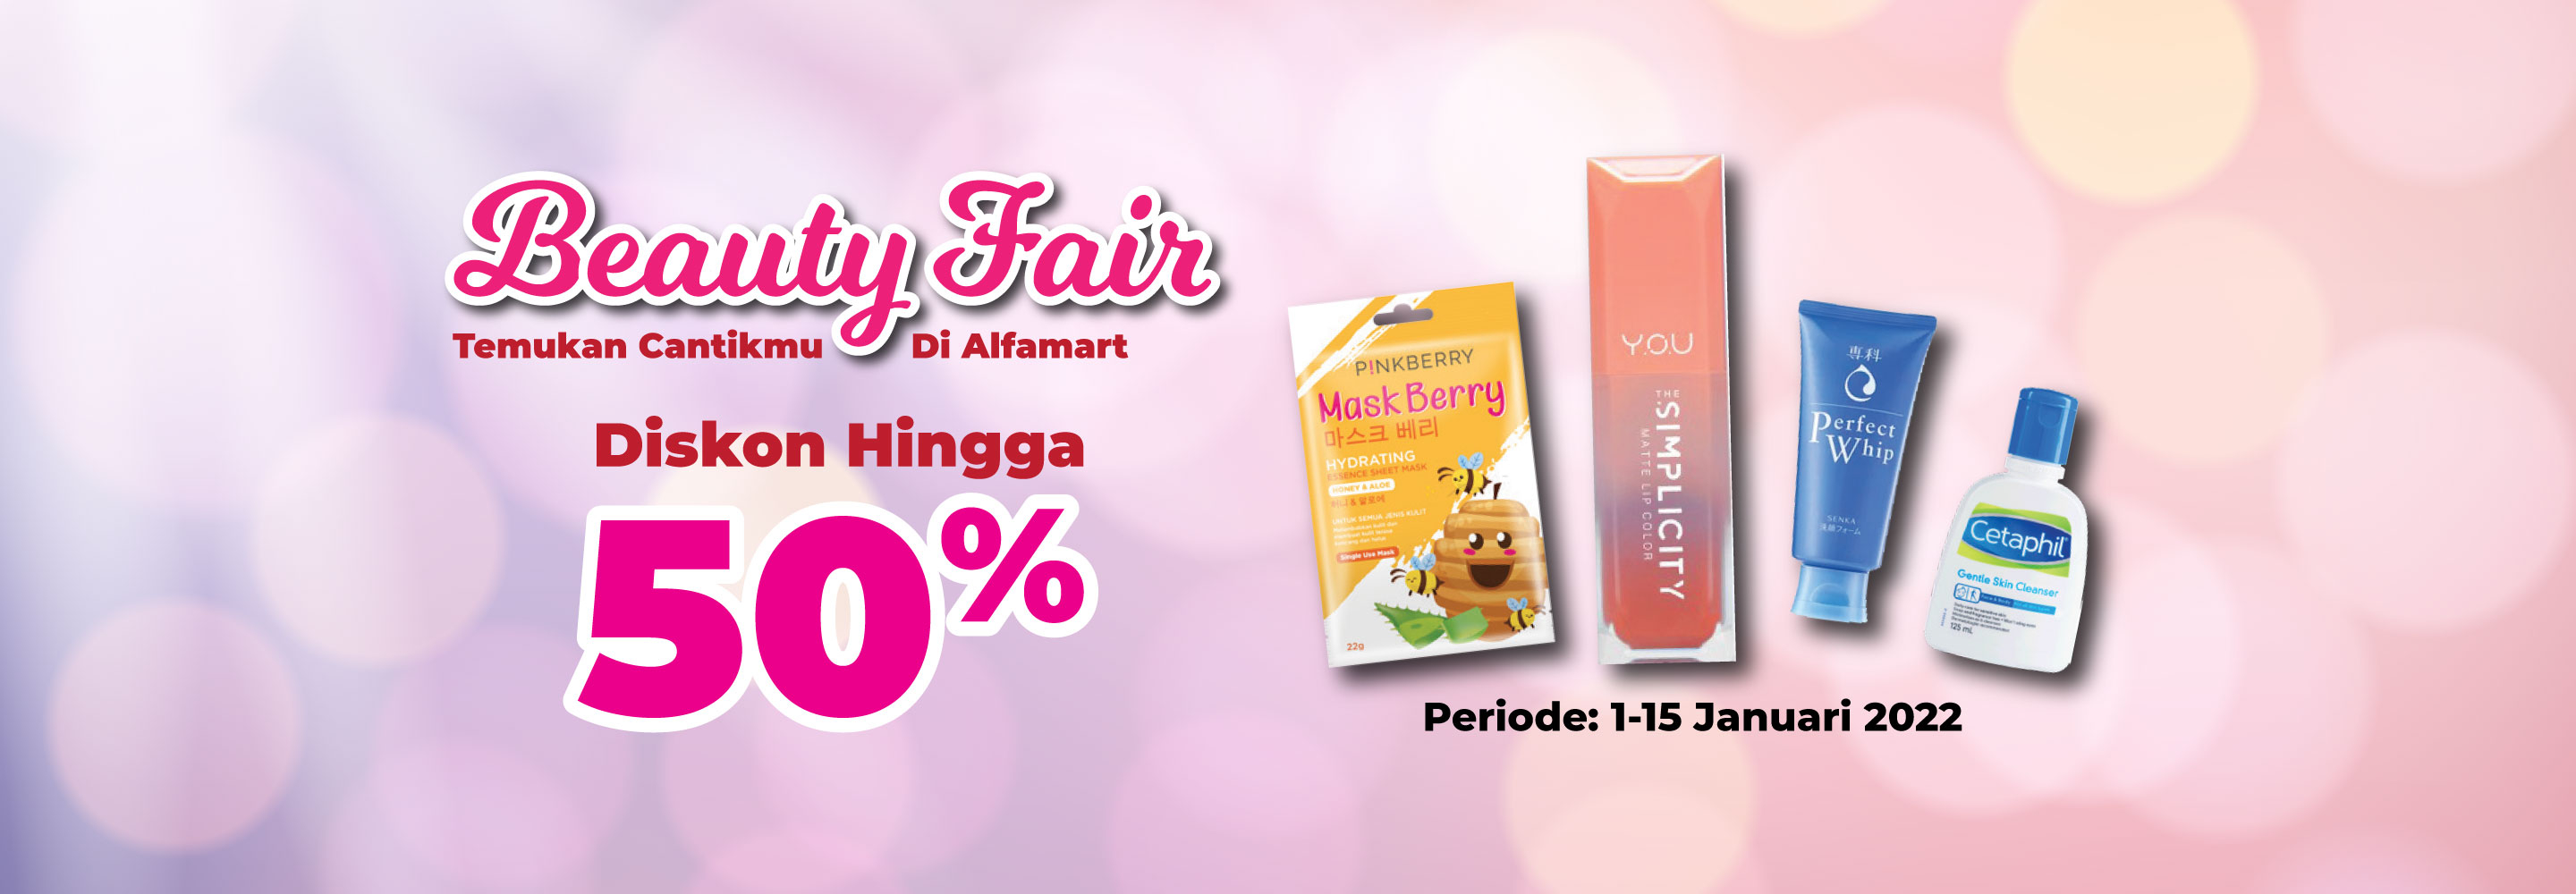 Promo Beauty Fair Alfamart